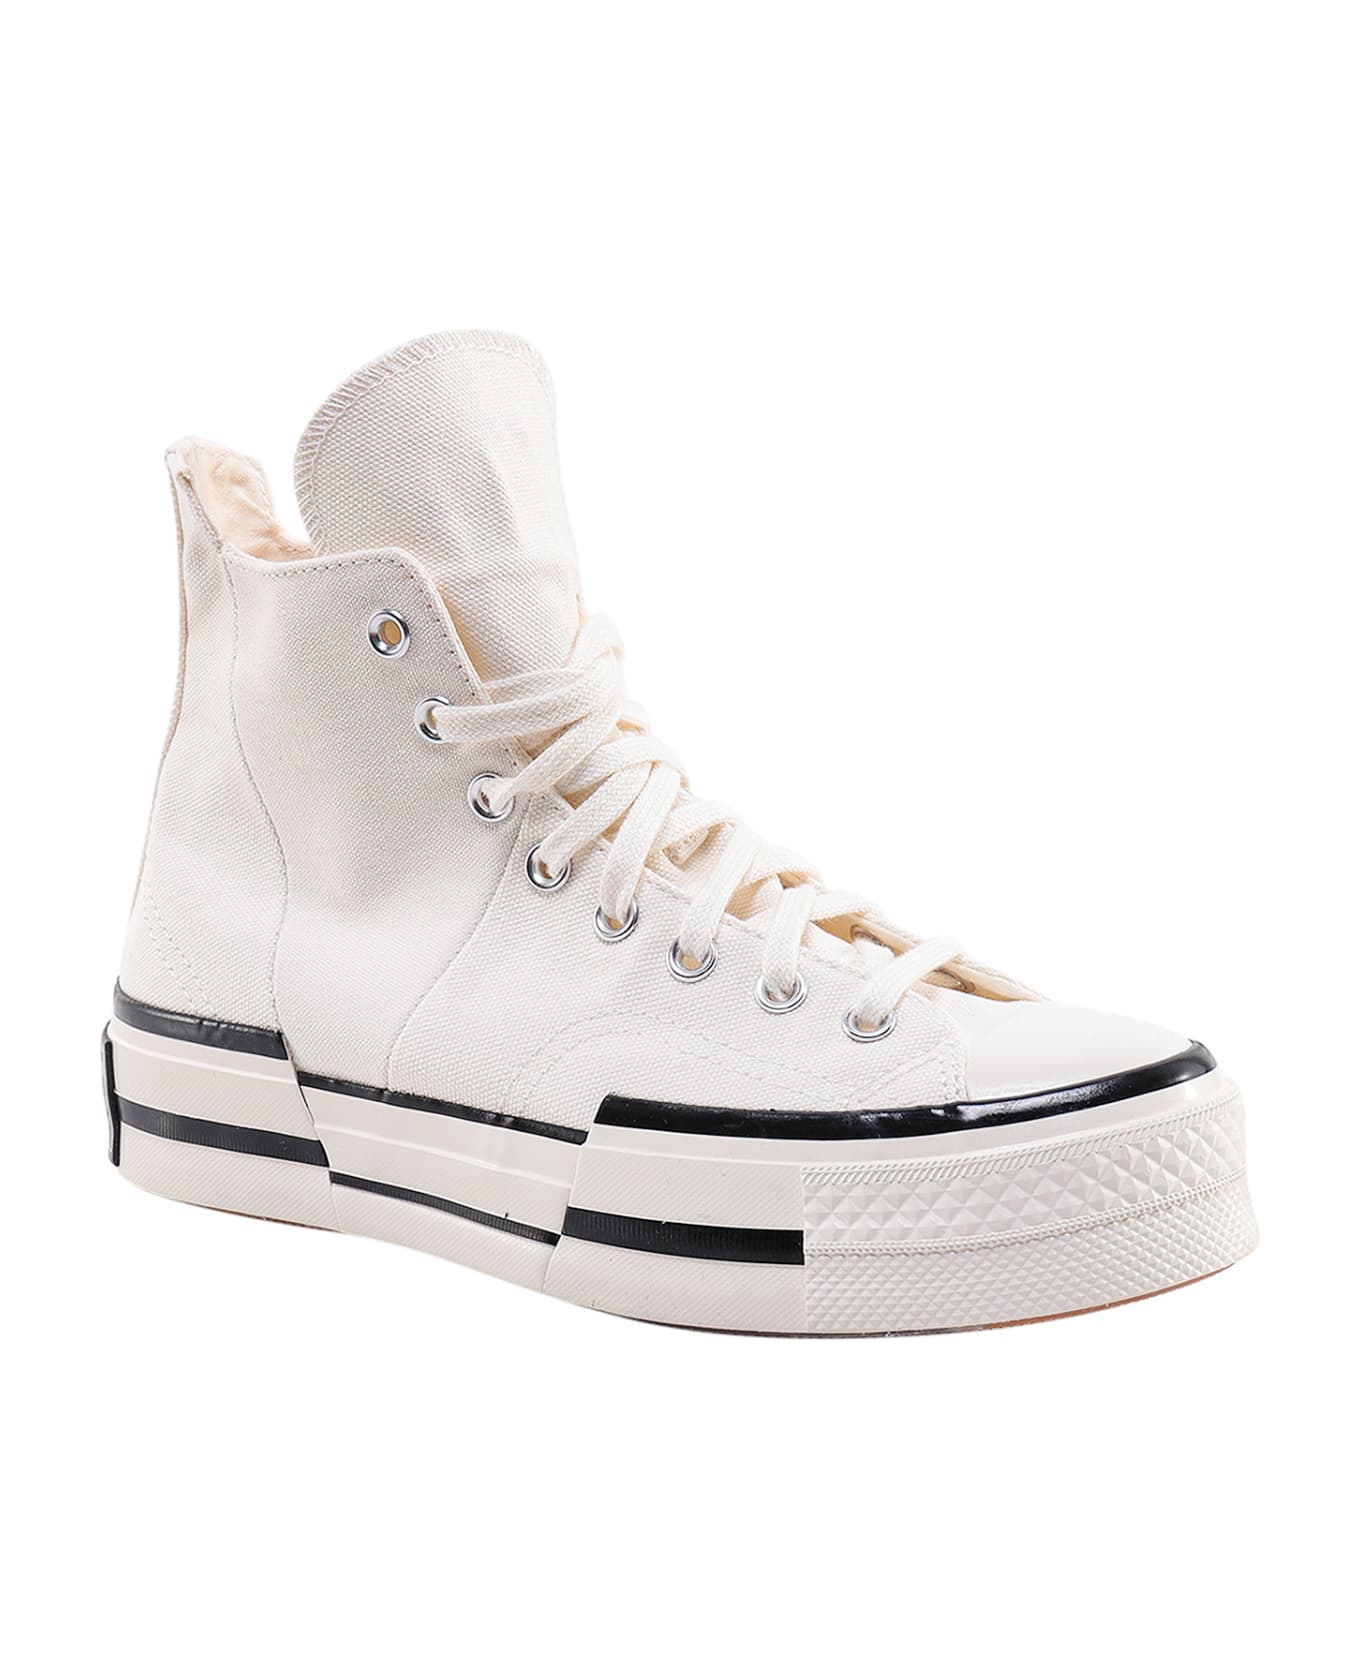 Converse Chuck 70 Plus Hi Sneakers - White